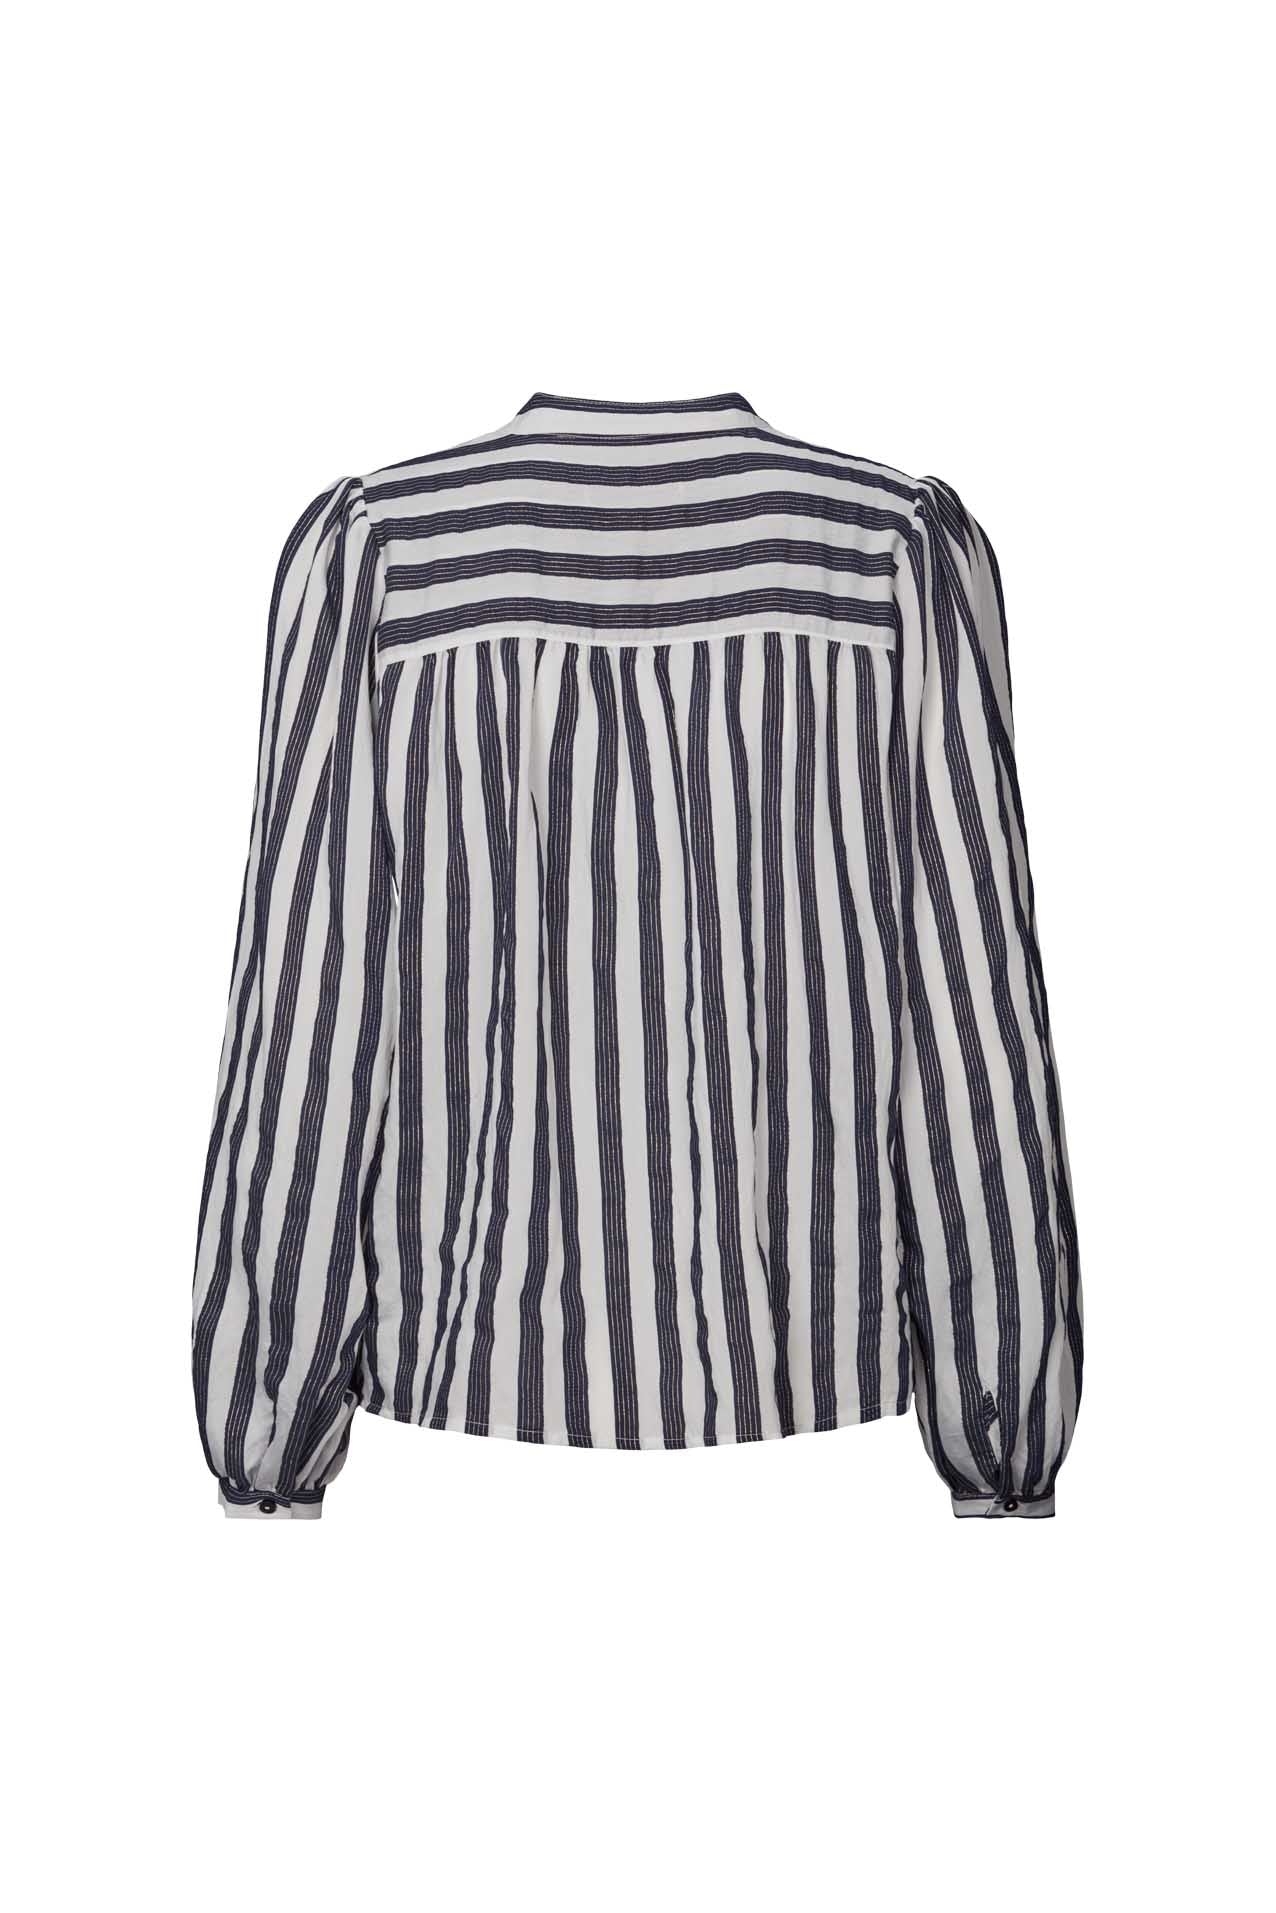 Lollys Laundry Elif Shirt - Dark Blue Stripe